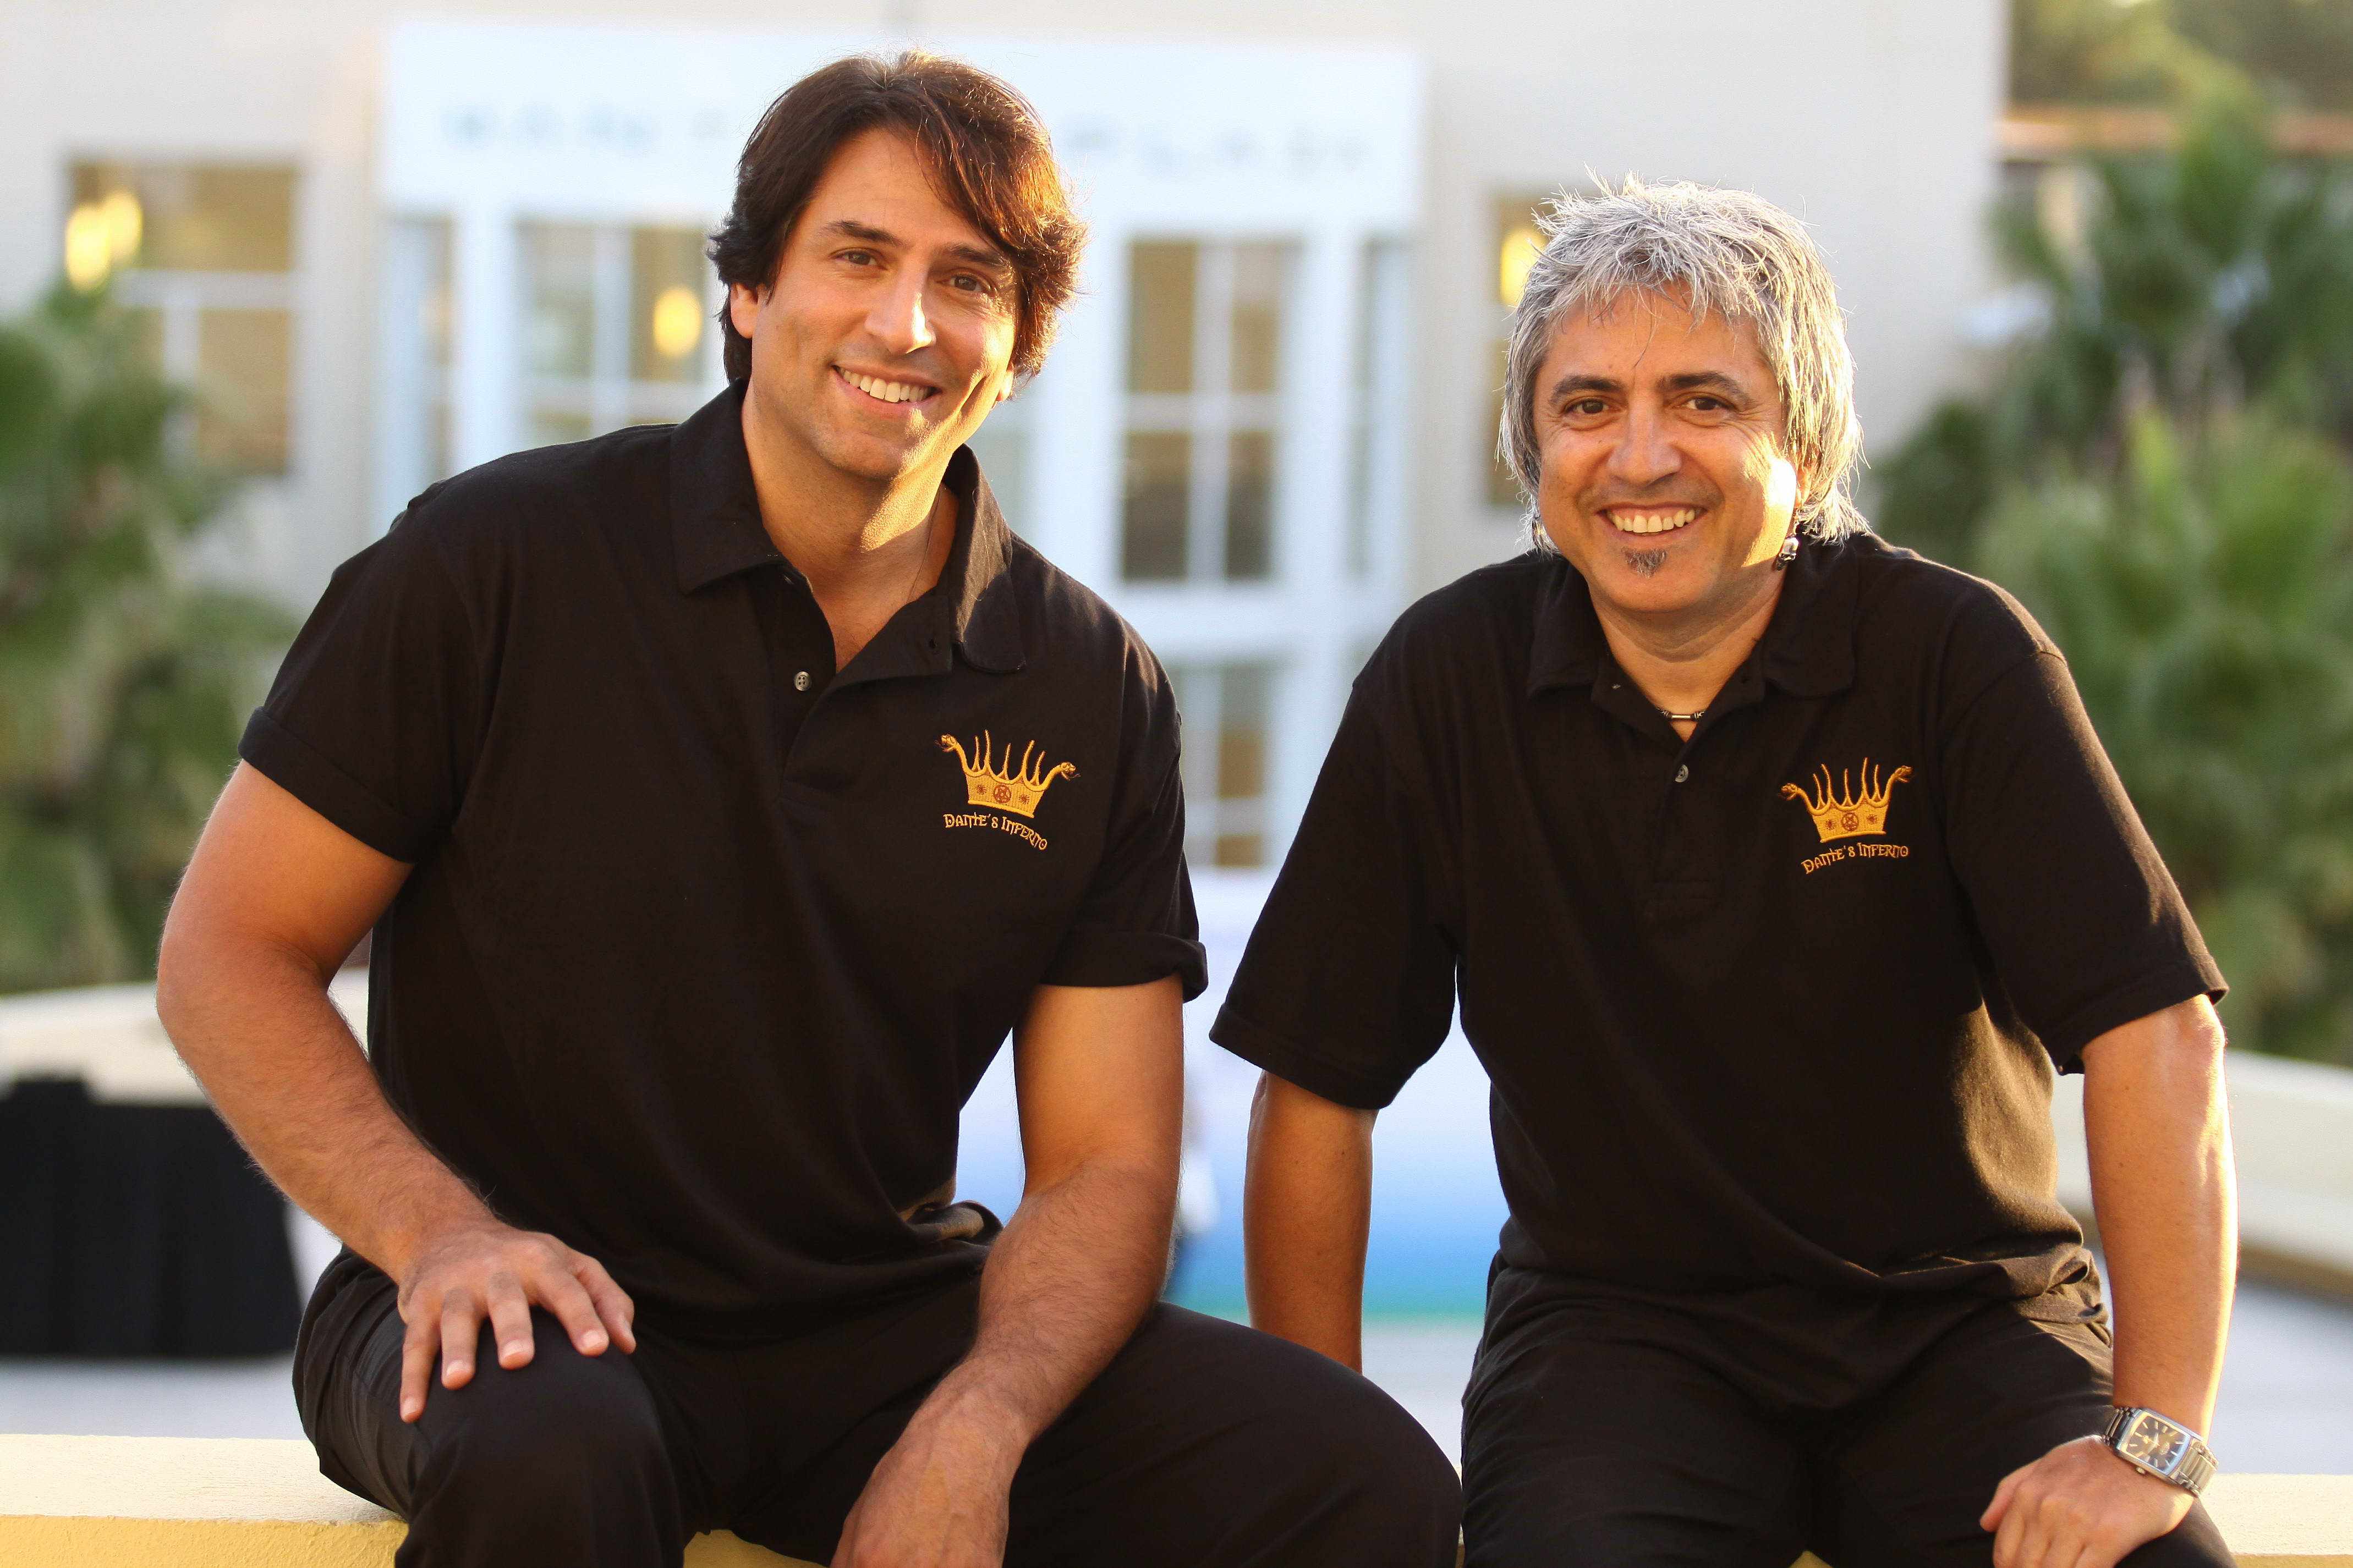 Boris Acosta and Vincent Spano during press conference at Mantra Resort in Punta del Este - Uruguay.